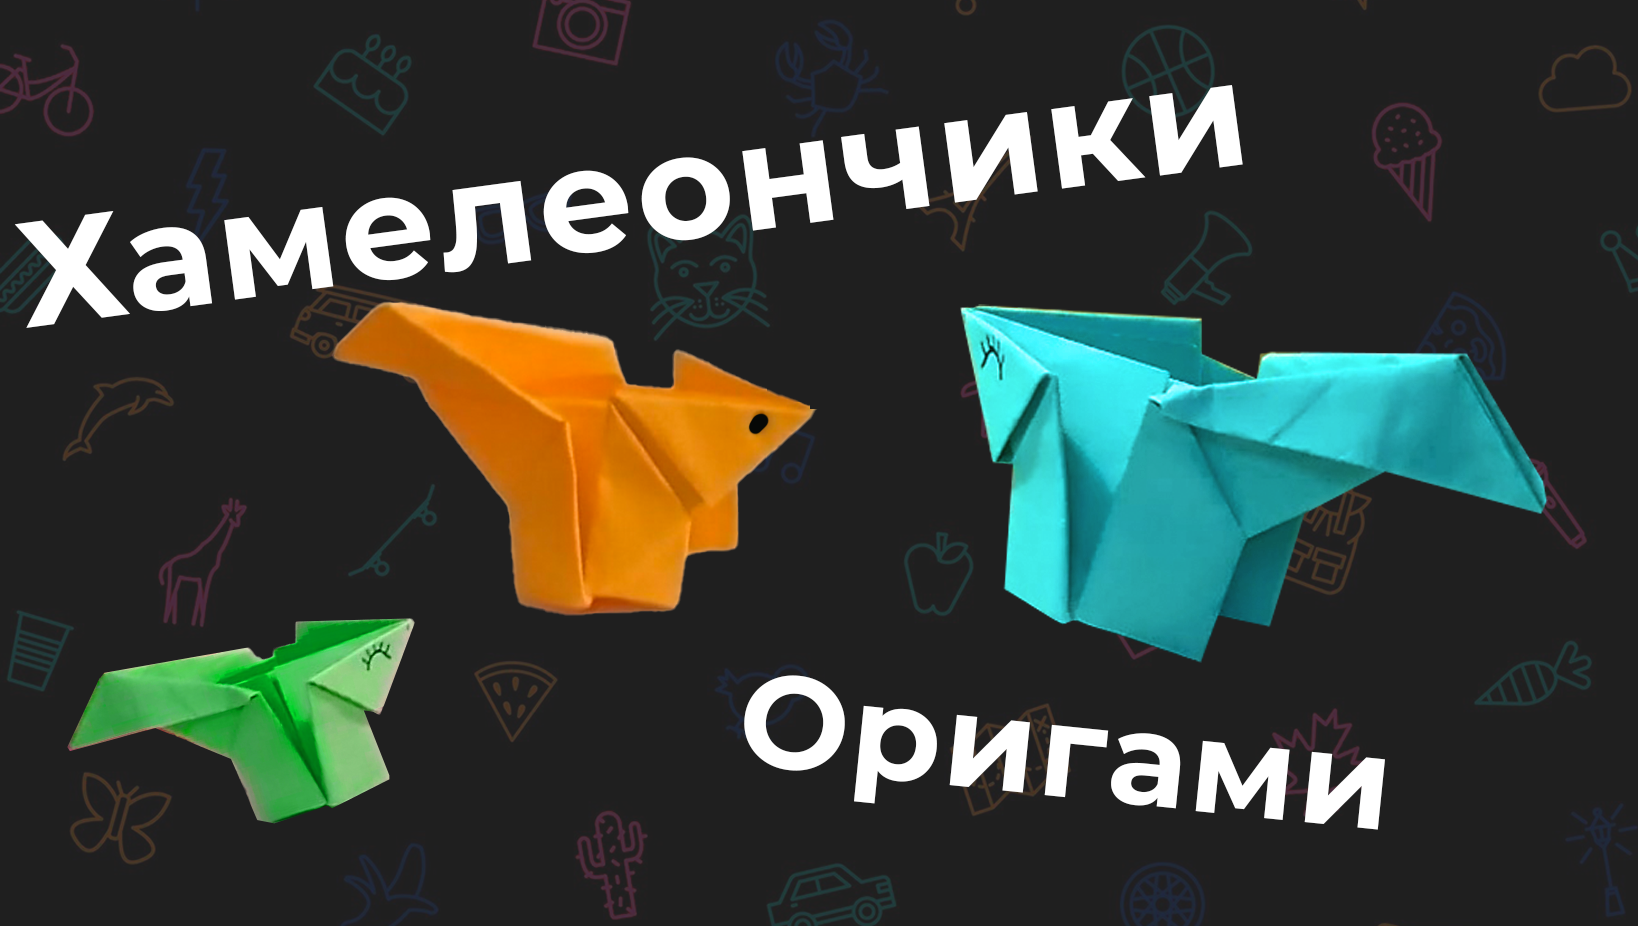 Хамелеончик оригами за 5 минут!